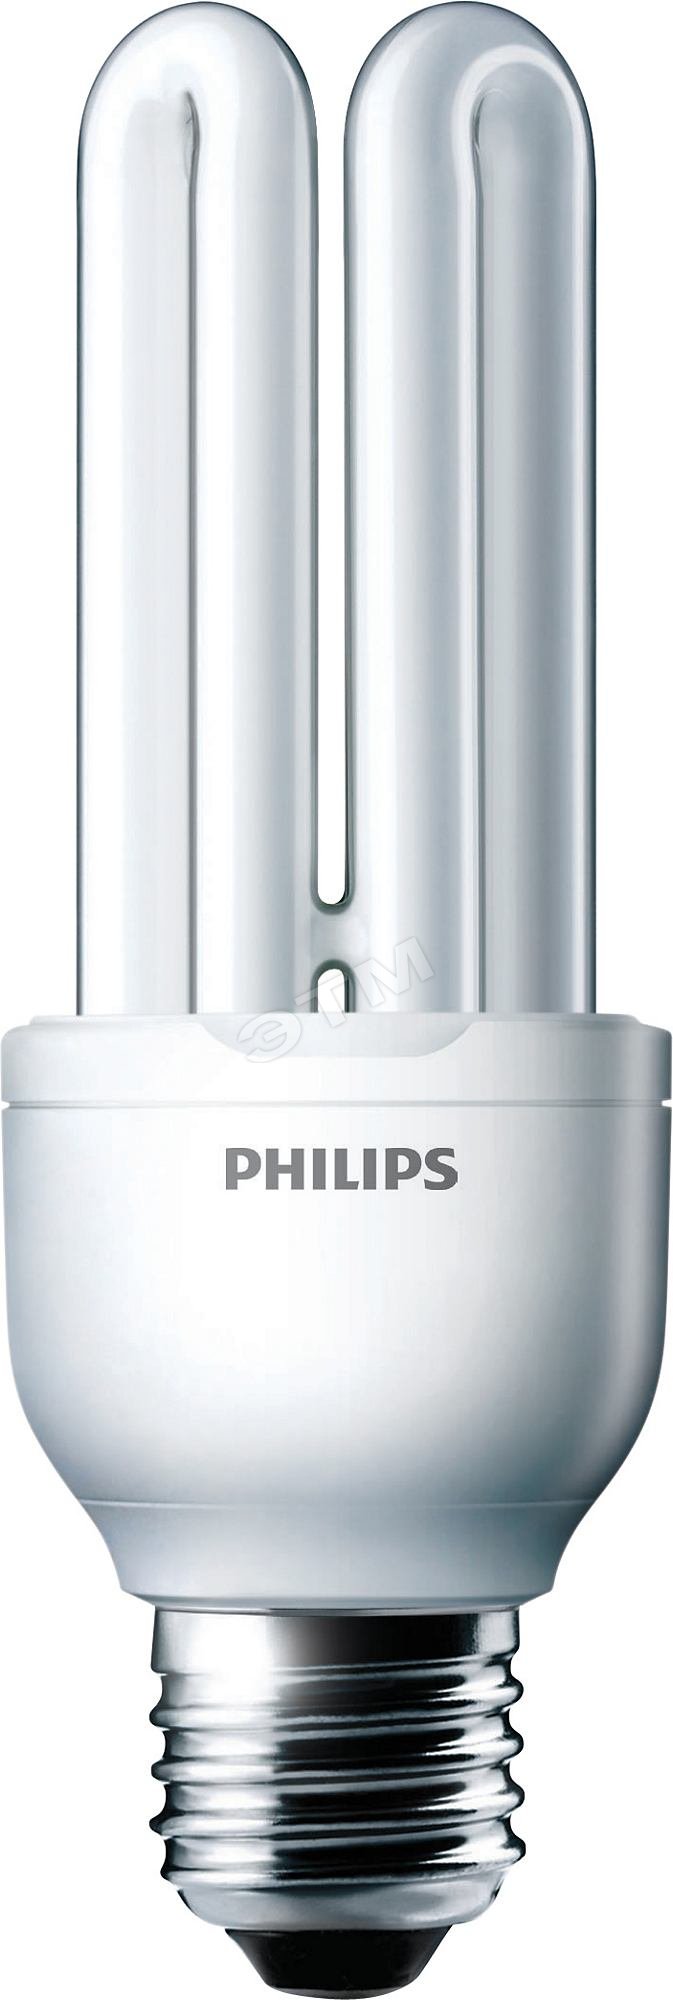 Энергосберегающие лампы Philips 18w. Лампа Philips Ecohome Stick 23w CDL e27. Лампа люминесцентная компактная энергосберегающая Philips Ecotone 220-240b 18bt. Philips 30w e27 220-240 led.